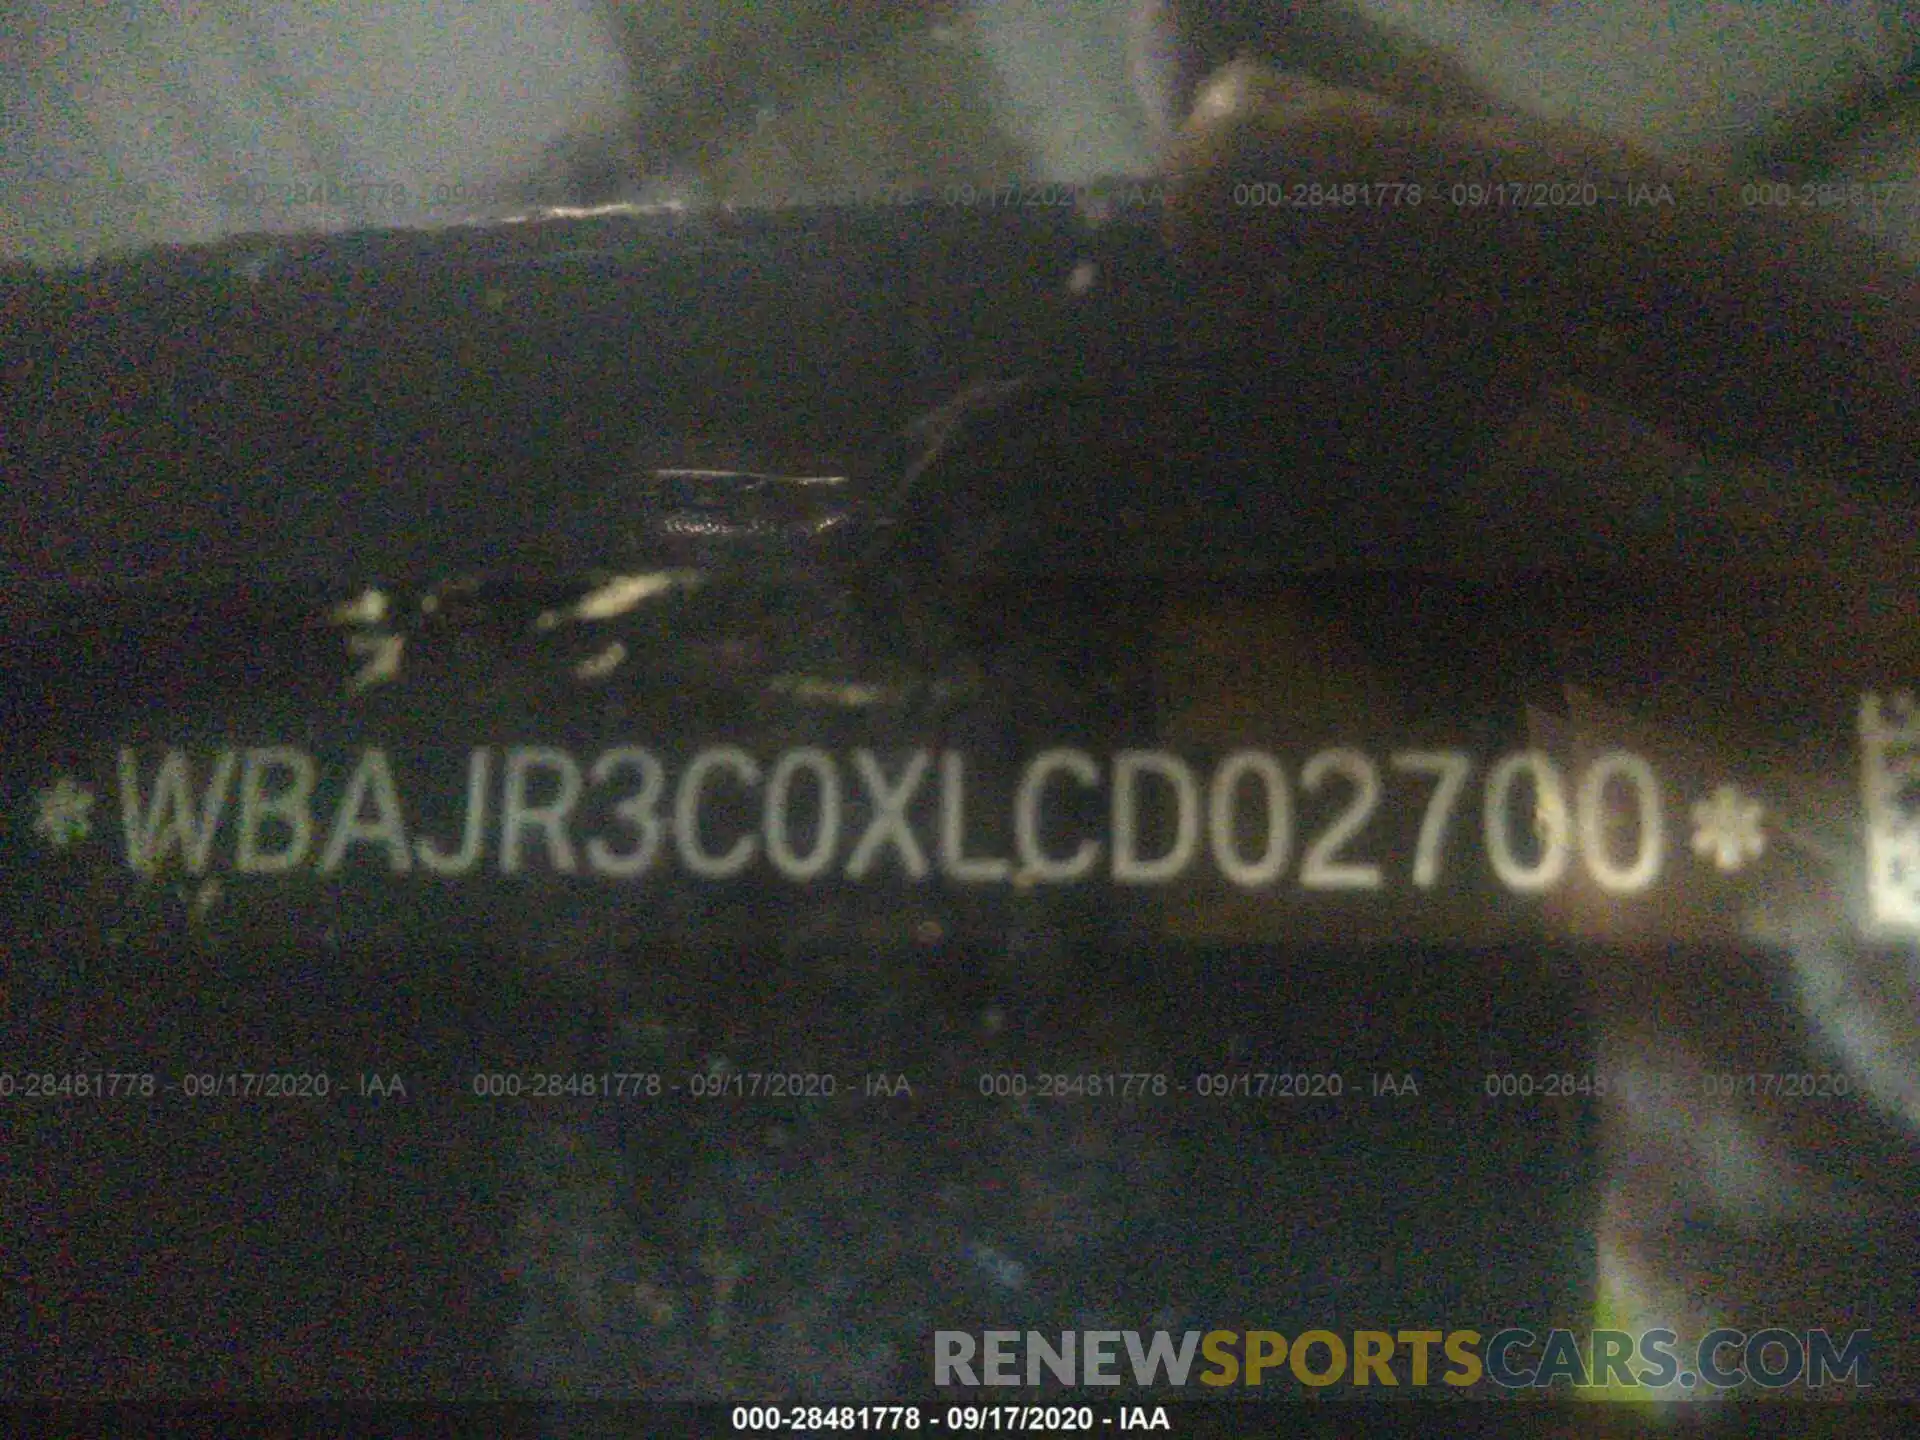 9 Photograph of a damaged car WBAJR3C0XLCD02700 BMW 5 SERIES 2020